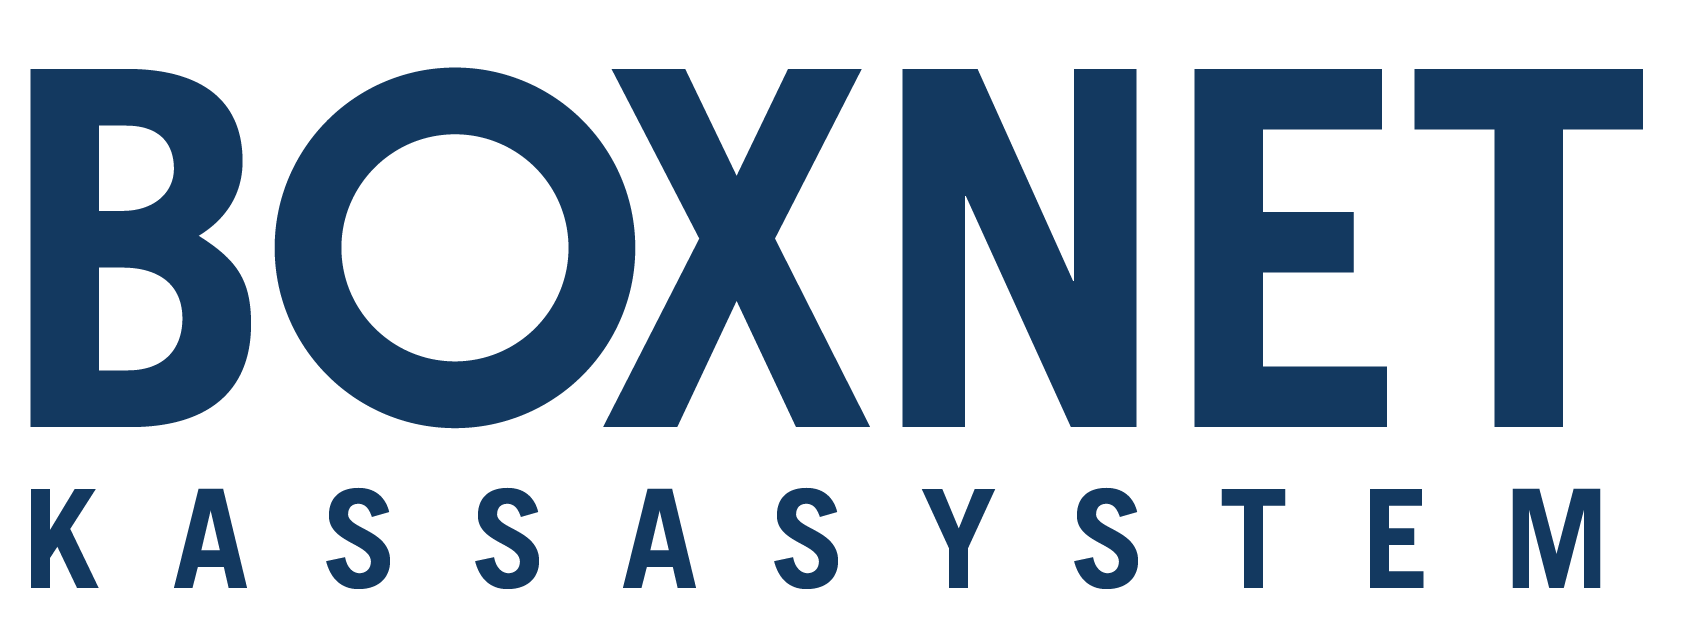 Box.net Logo - E Handel